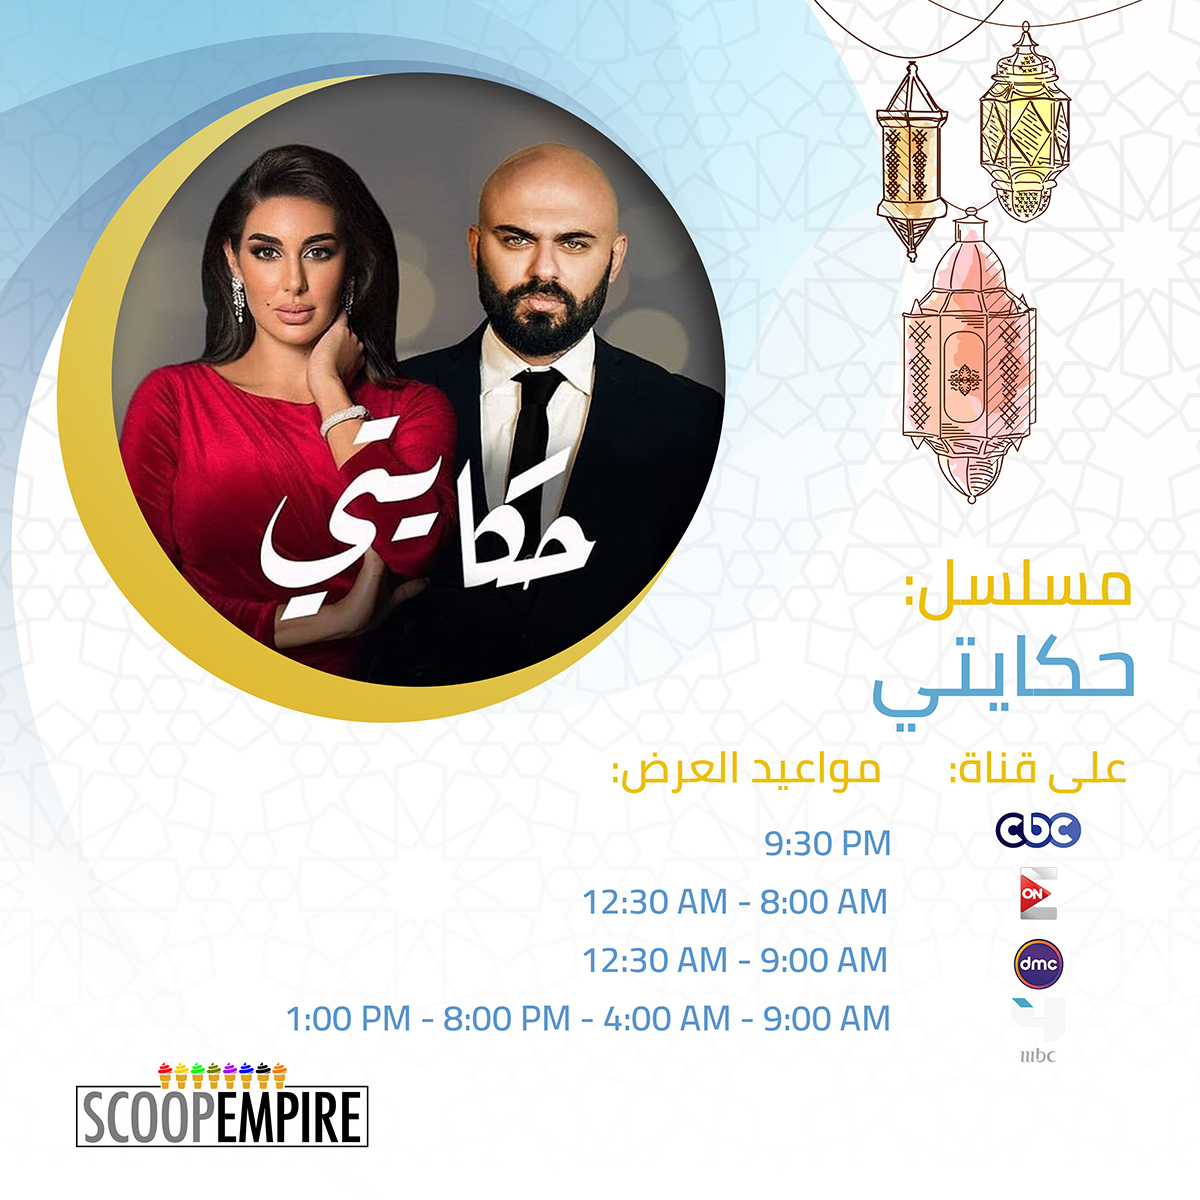 Your Ultimate Schedule for Ramadan 2019 TV Shows Scoop Empire